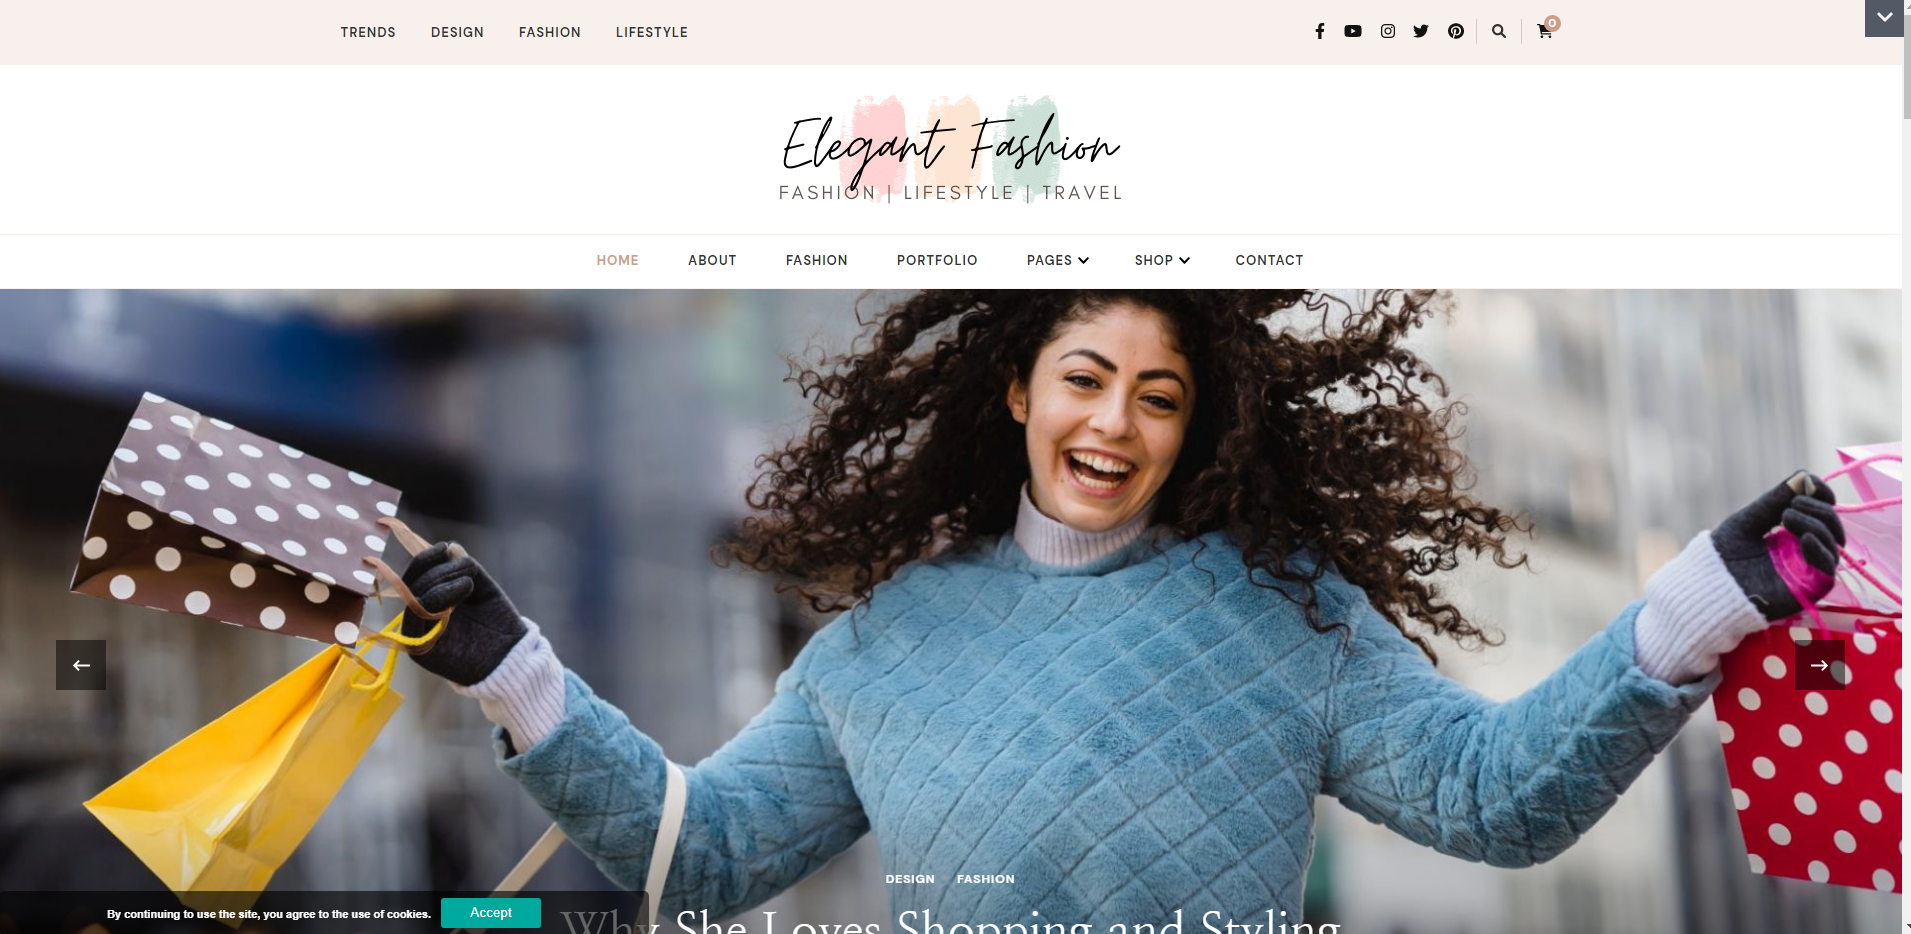 Elegant Fashion - free WordPress blog themes